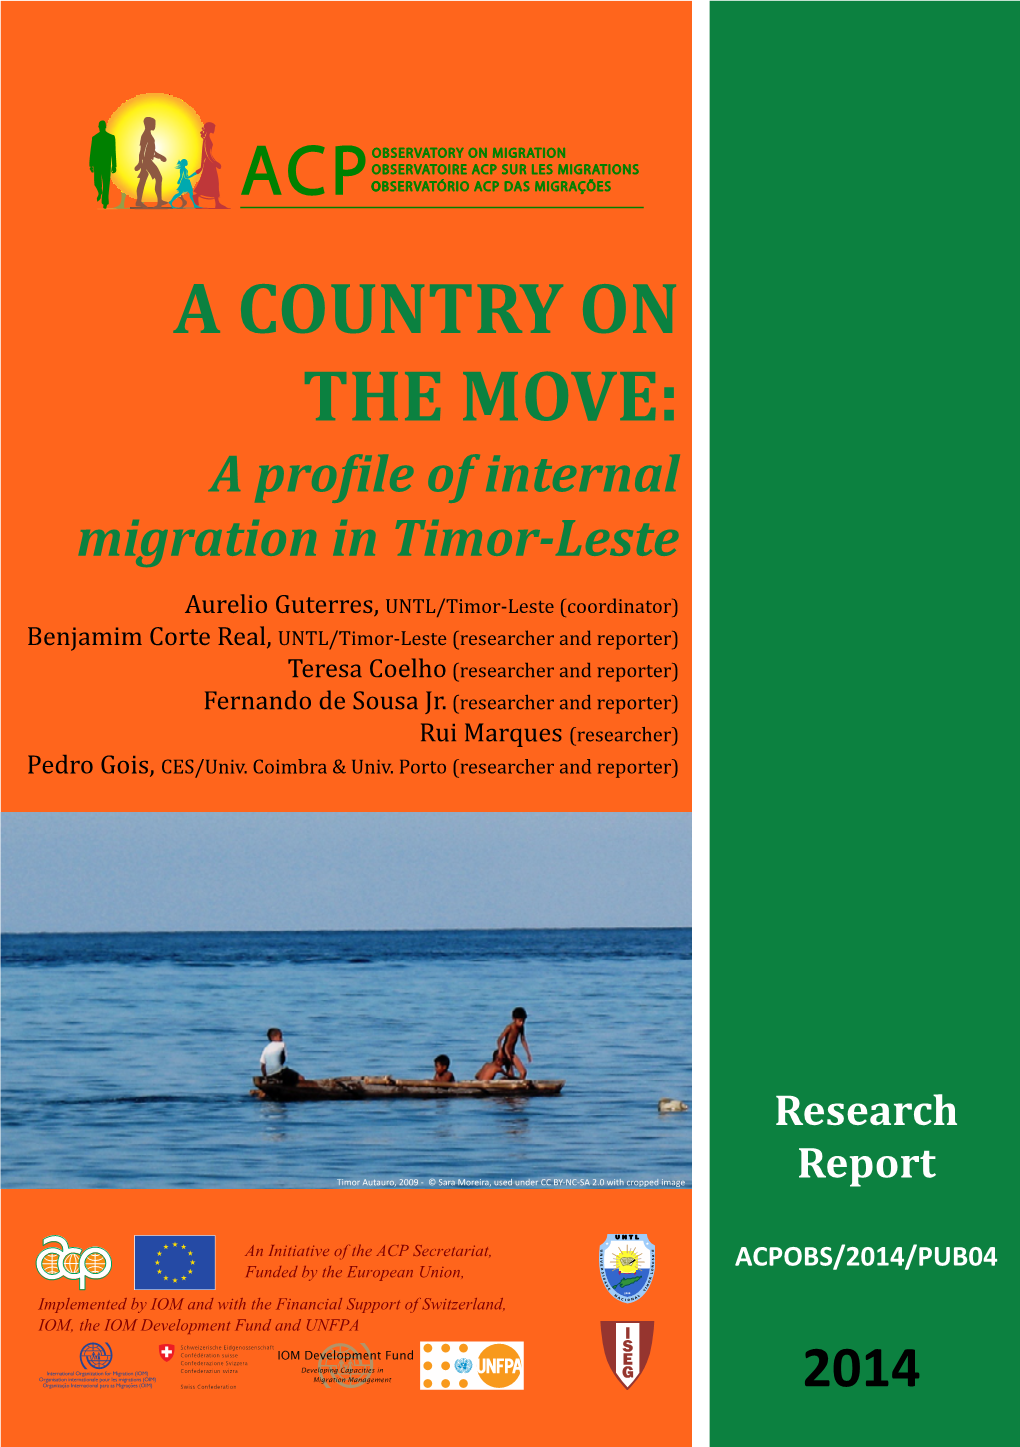 A Profile of Internal Migration in Timor-Leste